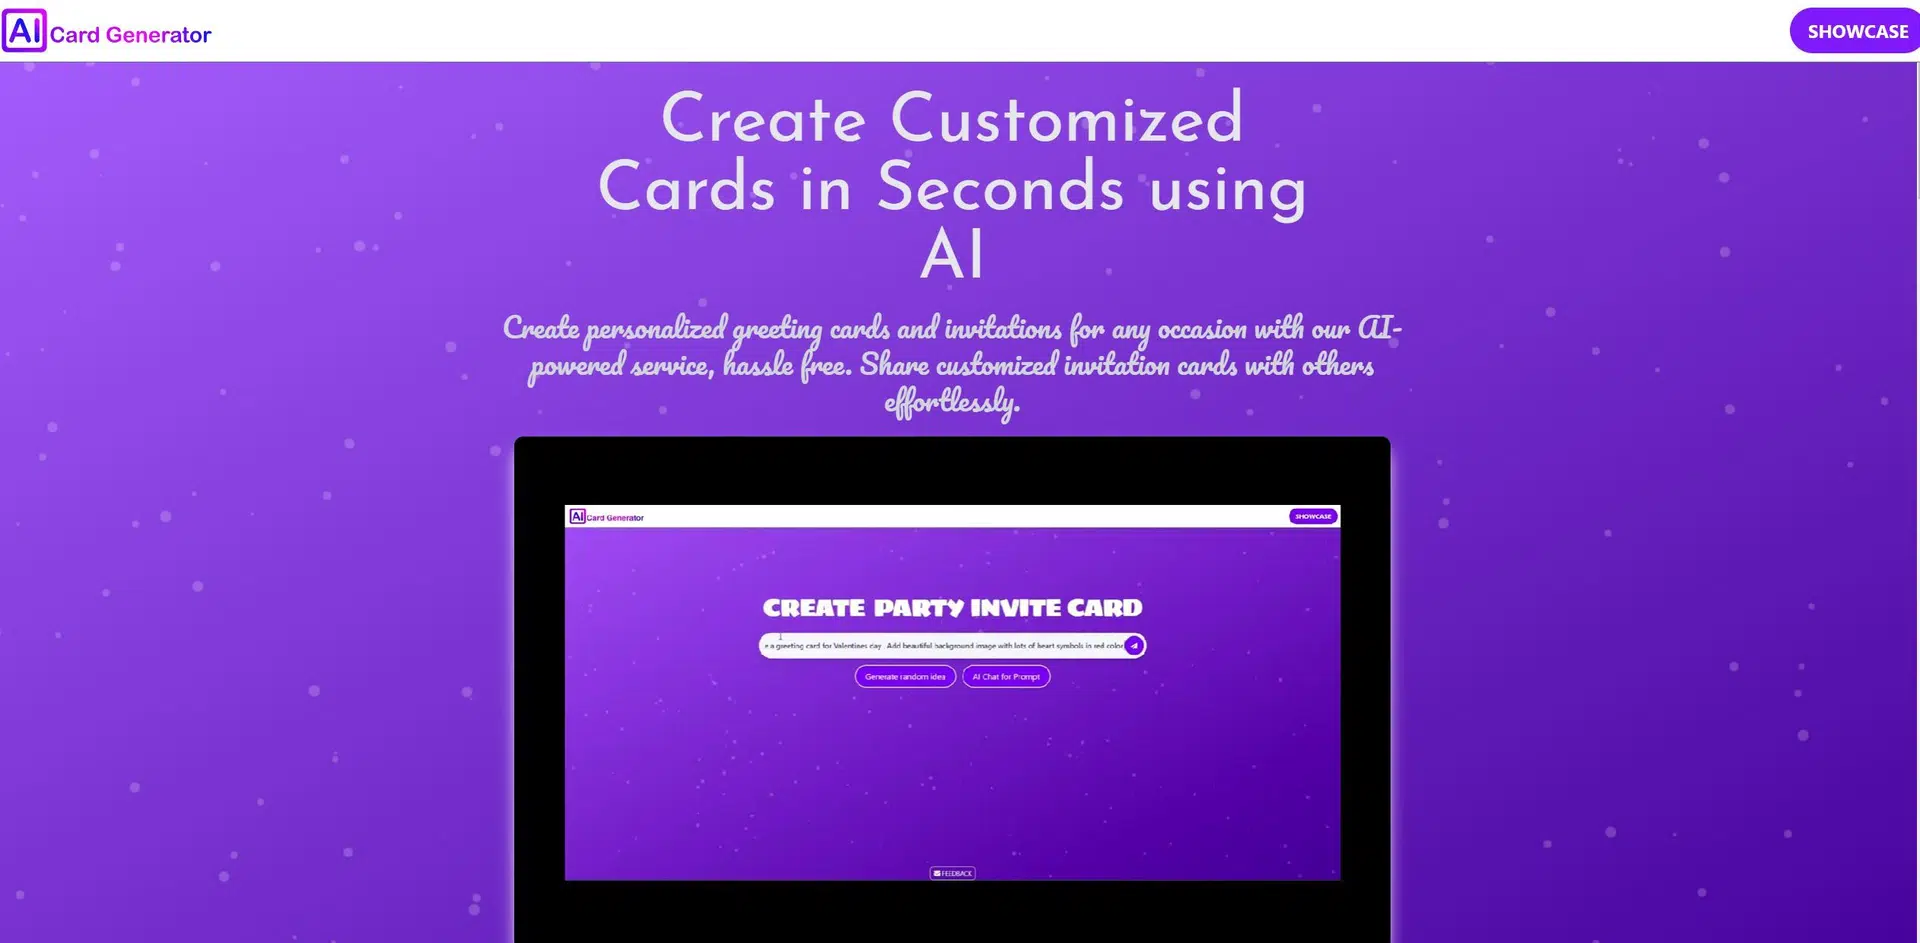 AI Card Generatorwebsite picture